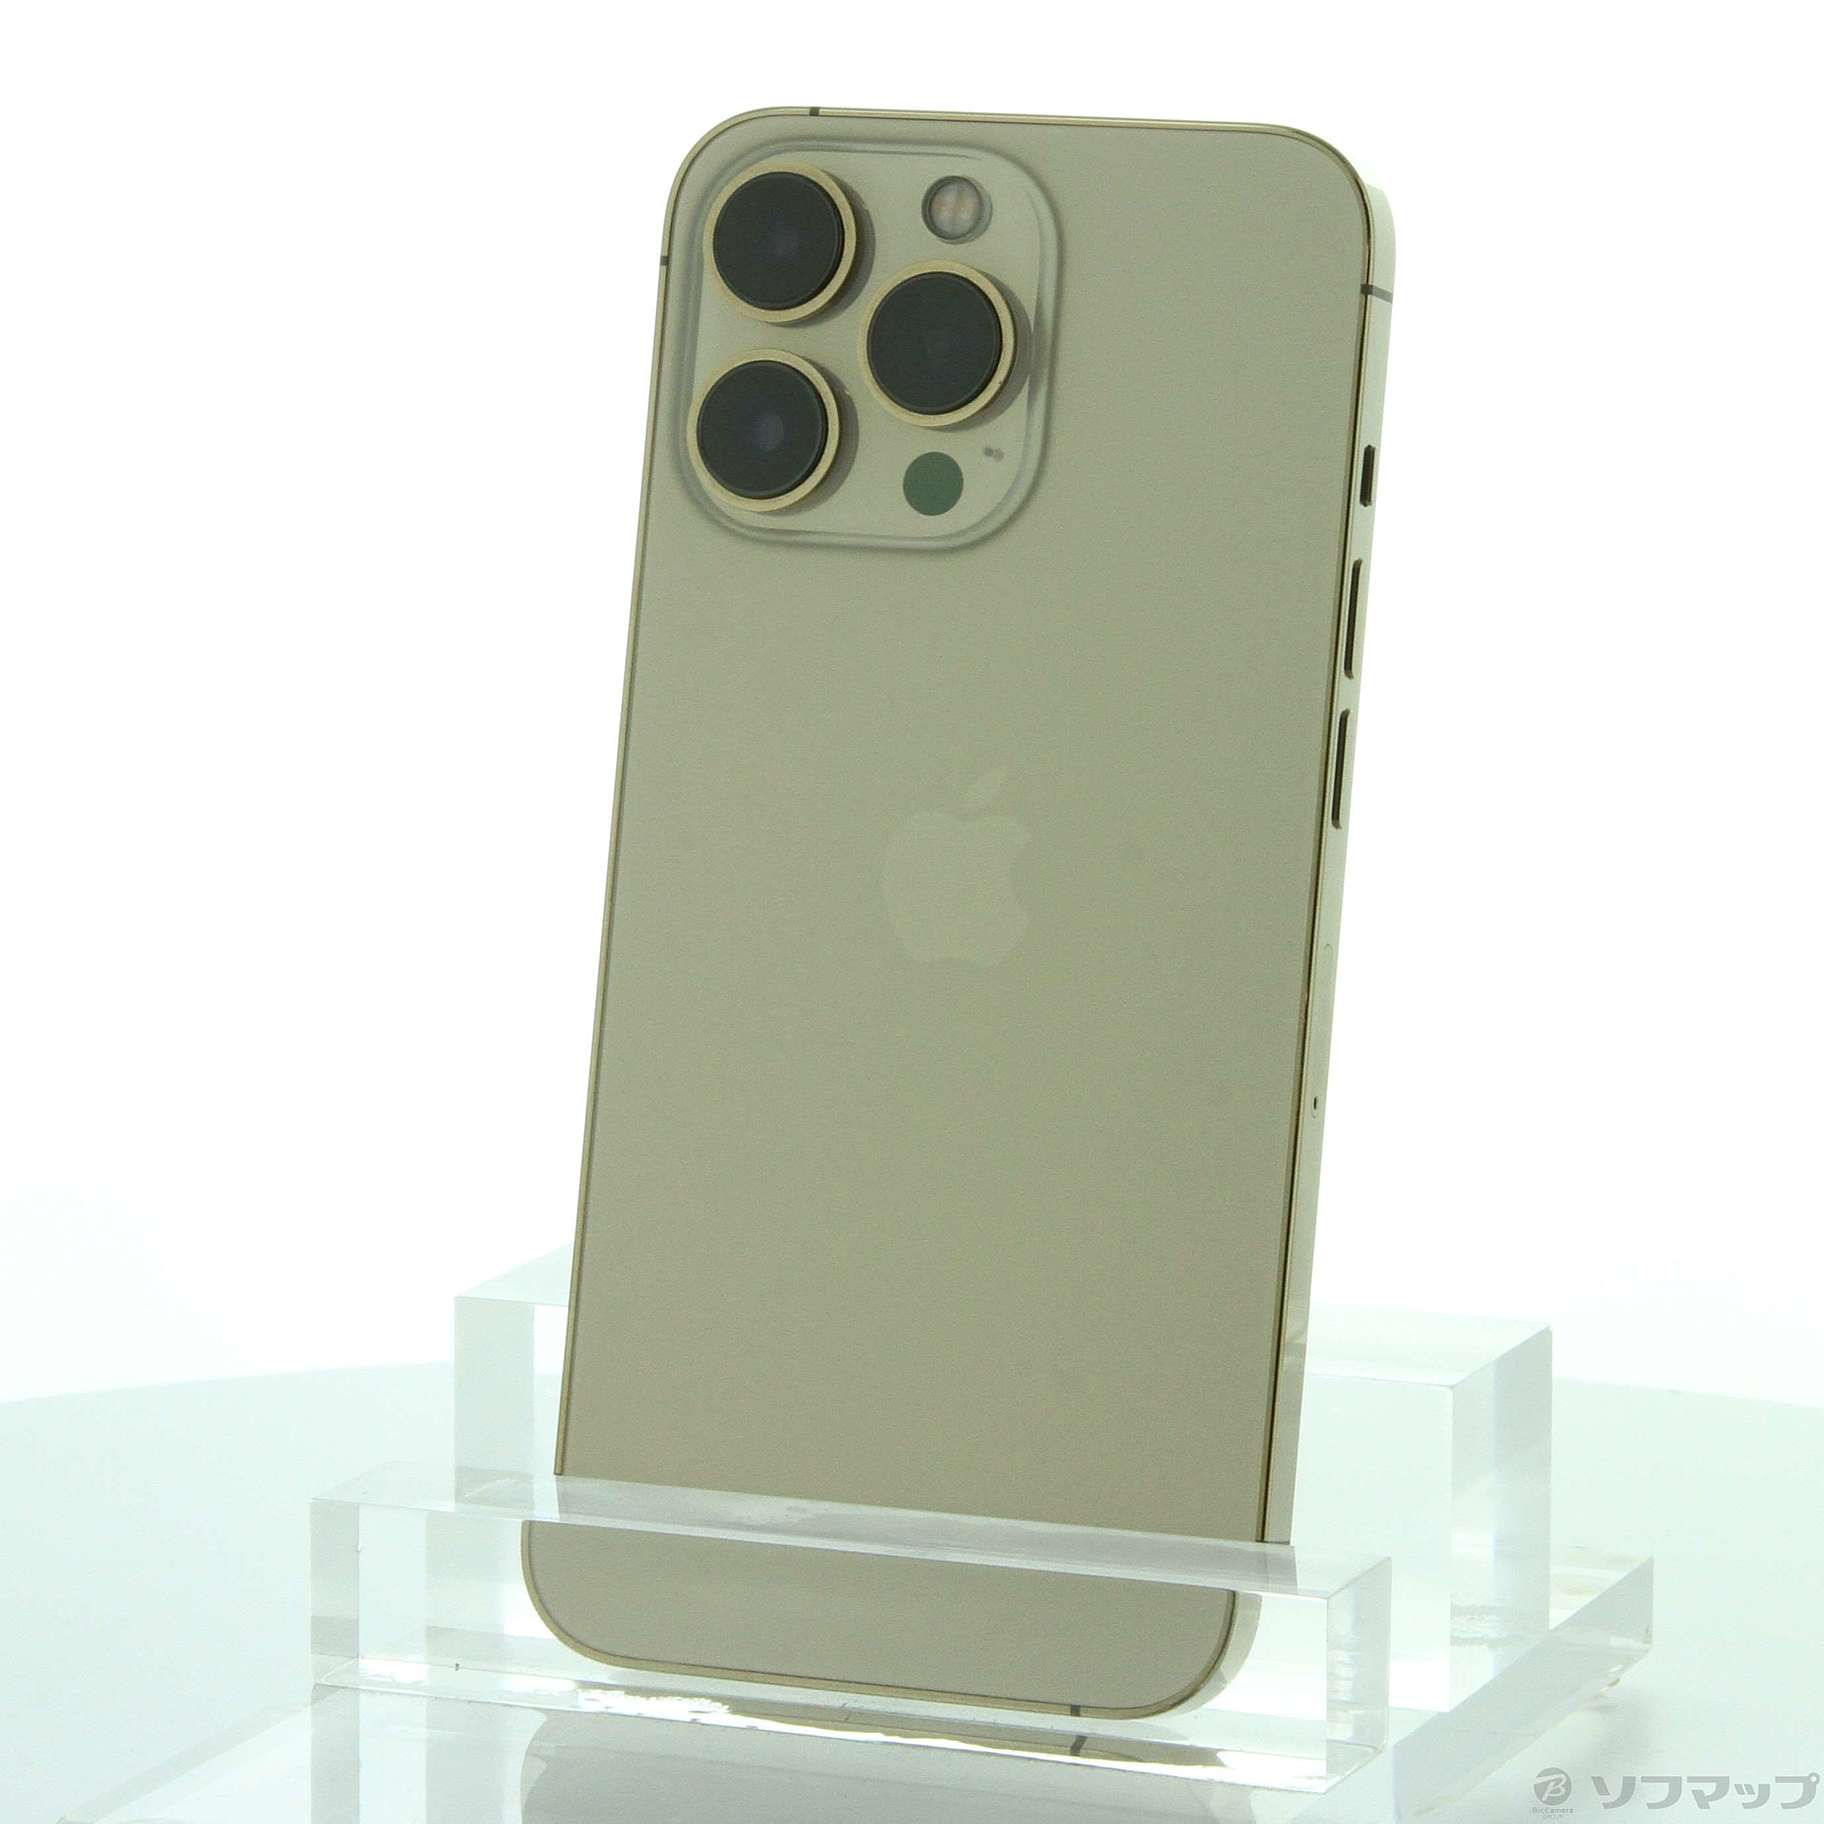 iPhone 13 Pro 128GB SIMフリー [ゴールド] 中古(白ロム)価格比較 